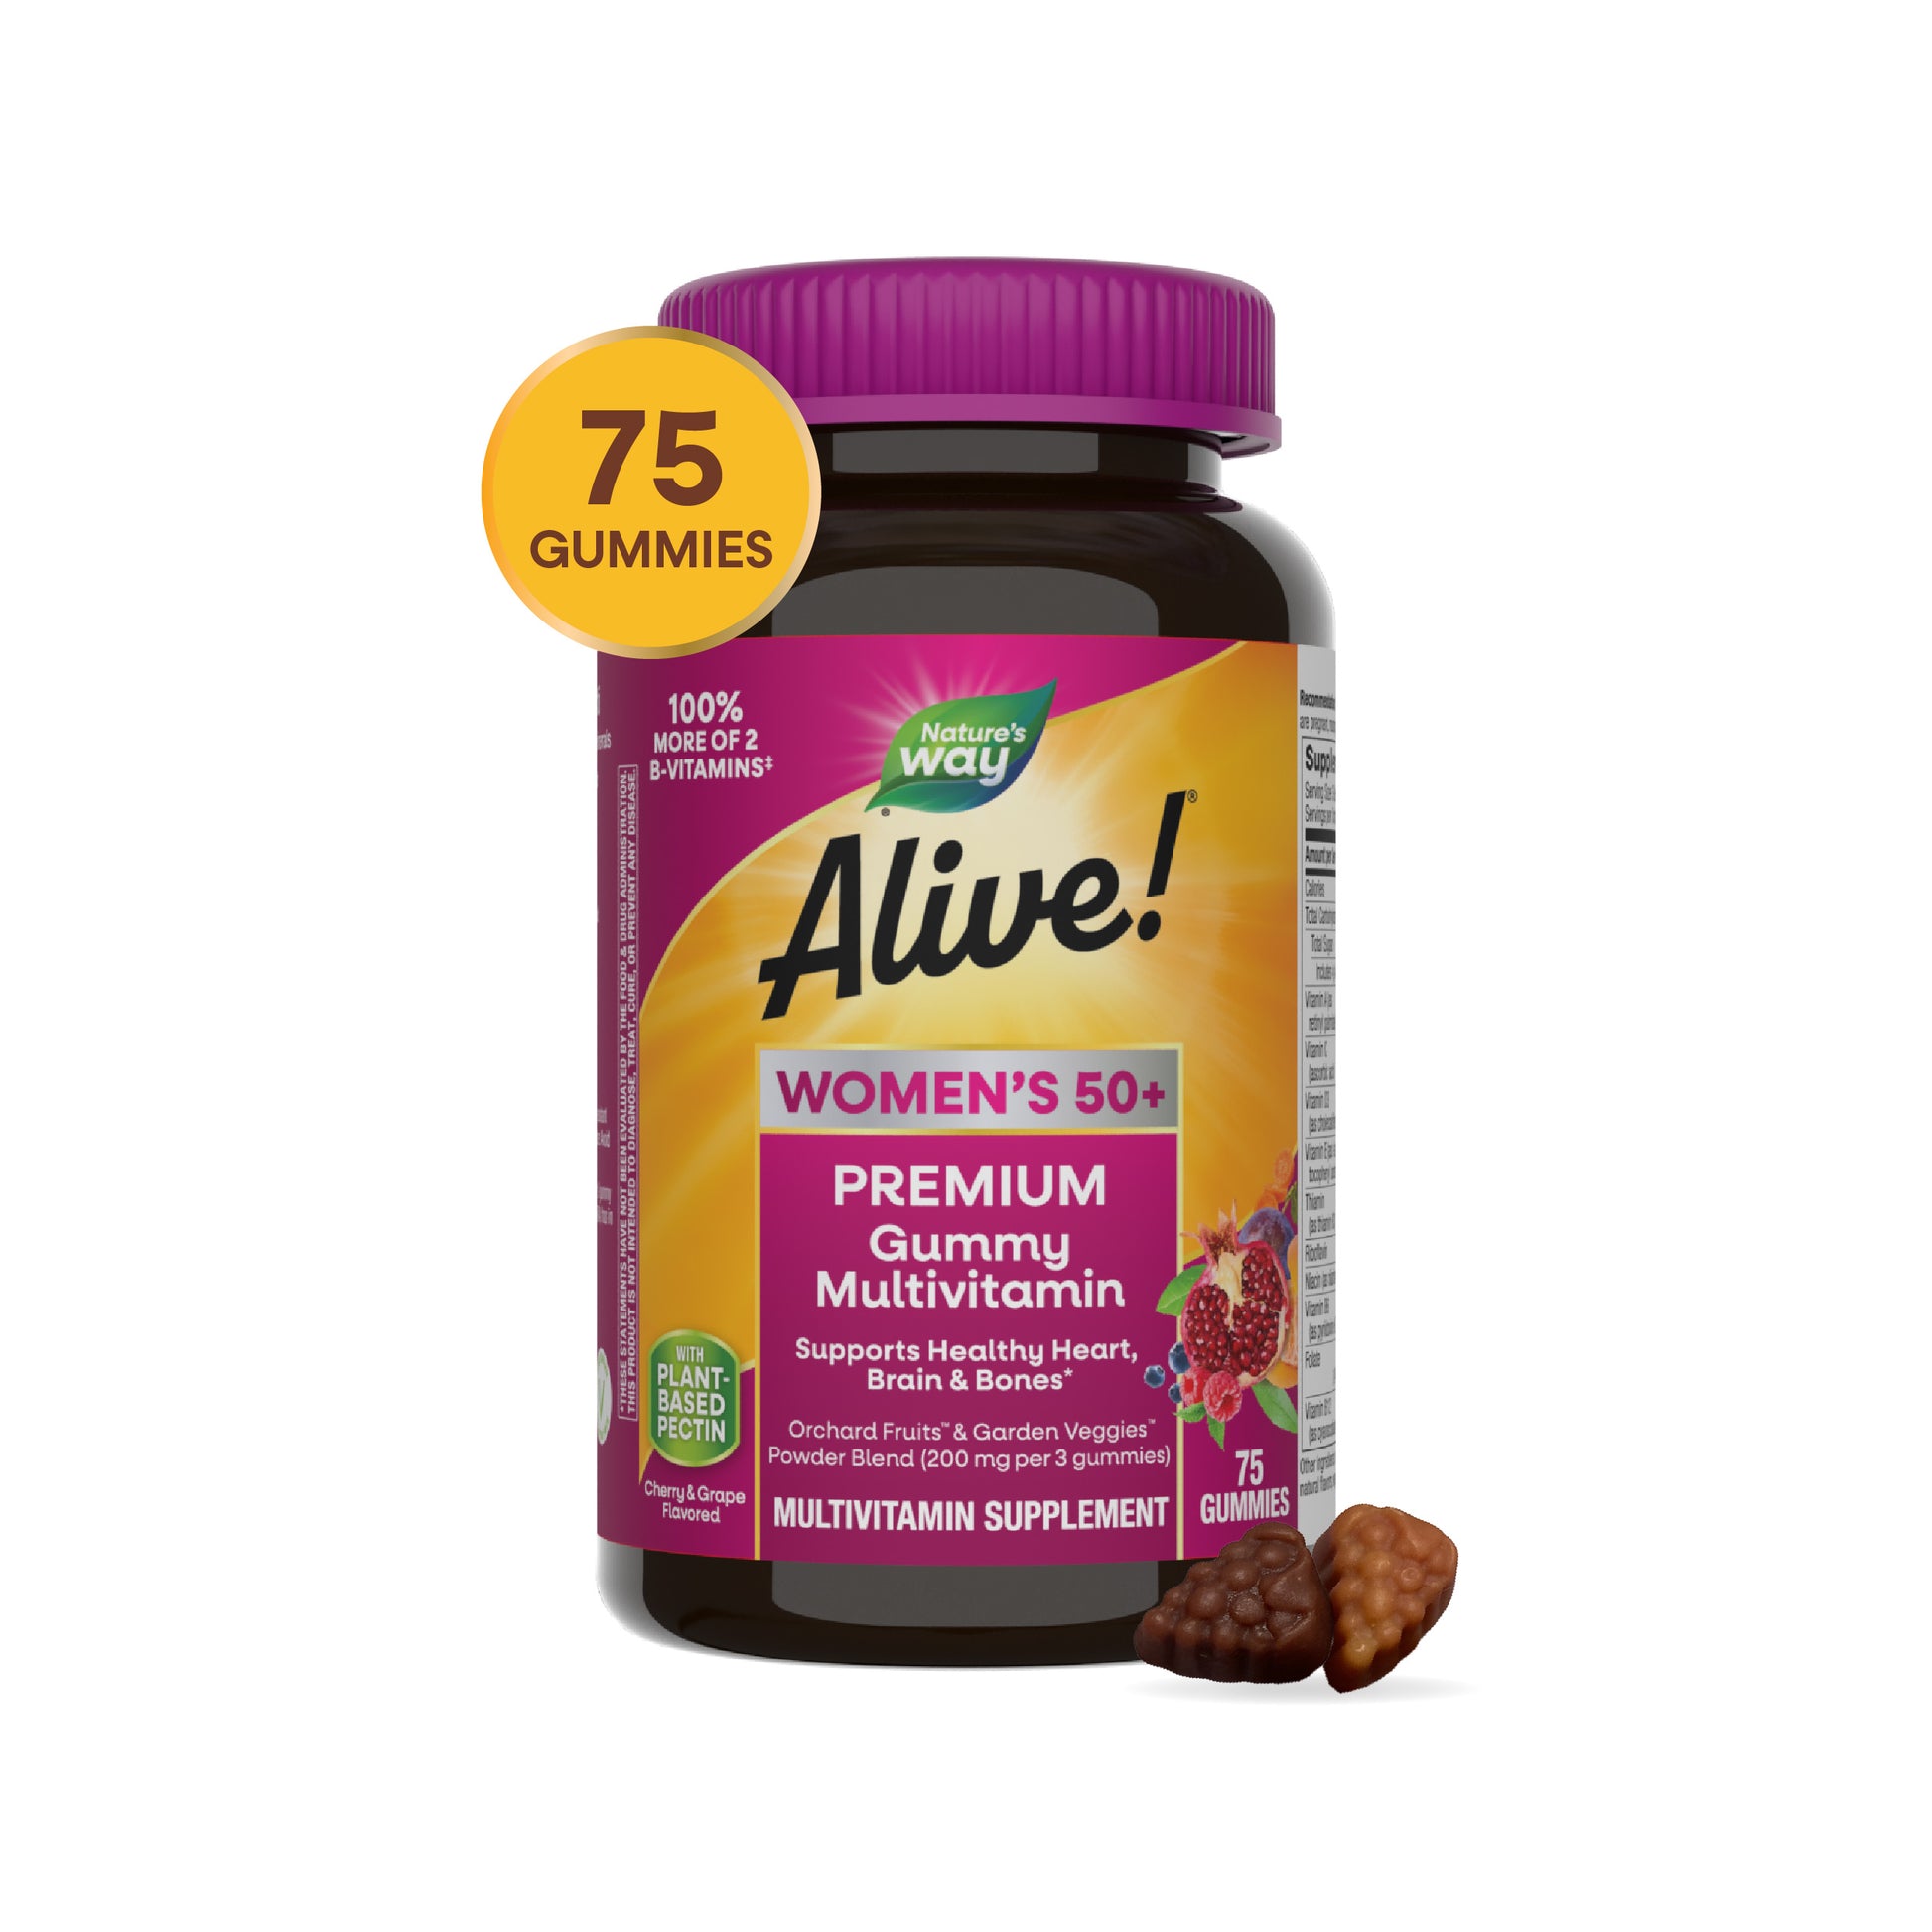 Nature's Way® | Alive!® Premium Women's 50+ Gummy Multivitamin